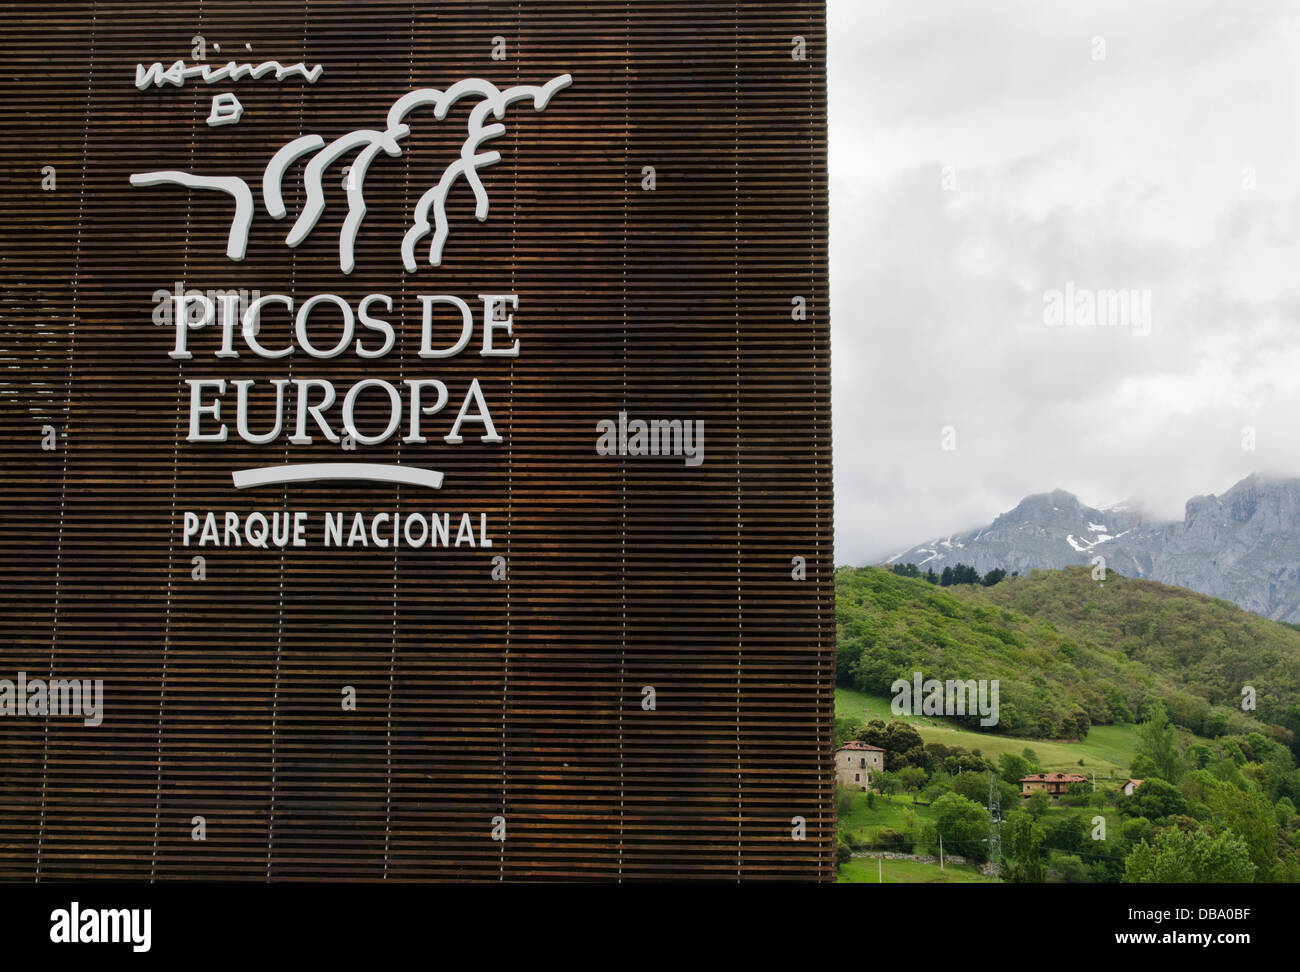 Visitor Centre Sotama, Picos de Europa National Park, Tama, Cillorigo de Liébana, Cantabria, Spain Stock Photo